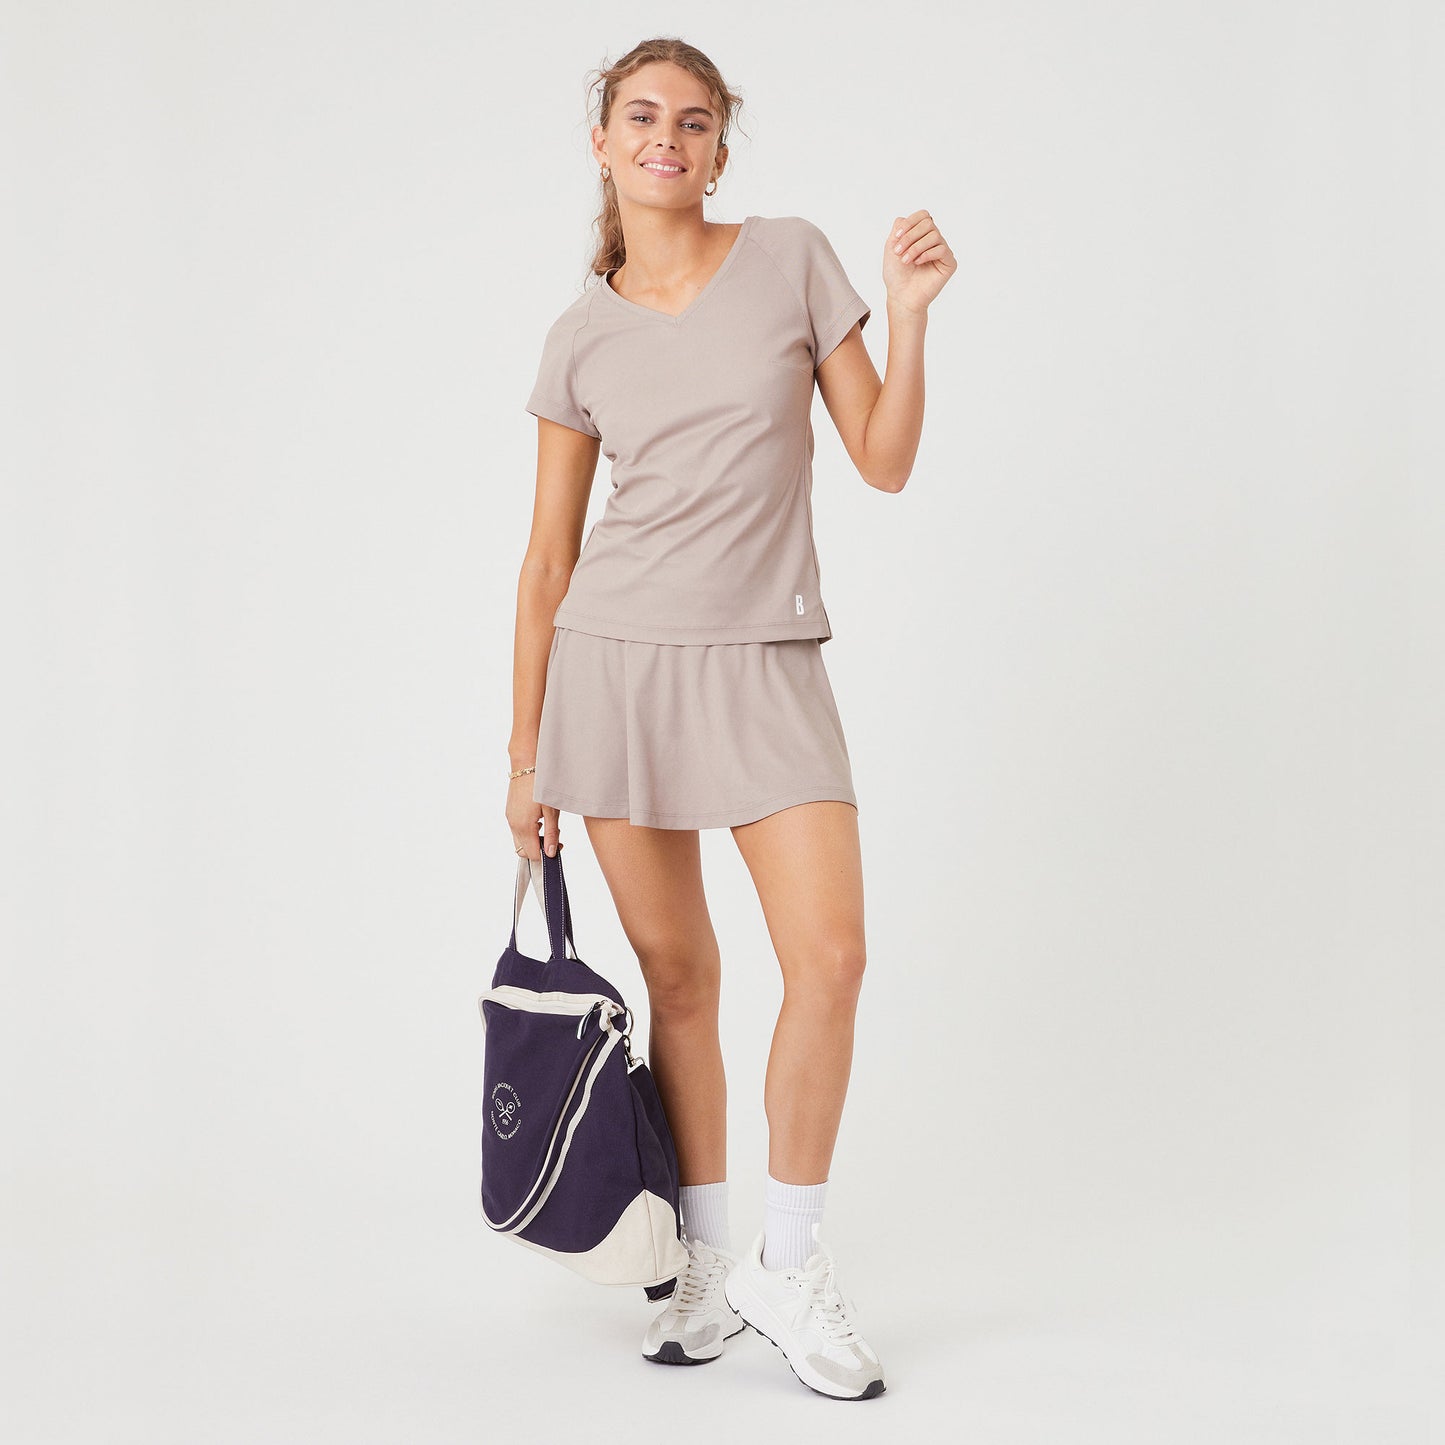 Björn Borg Ace Women's Tennis Shirt Brown (3)